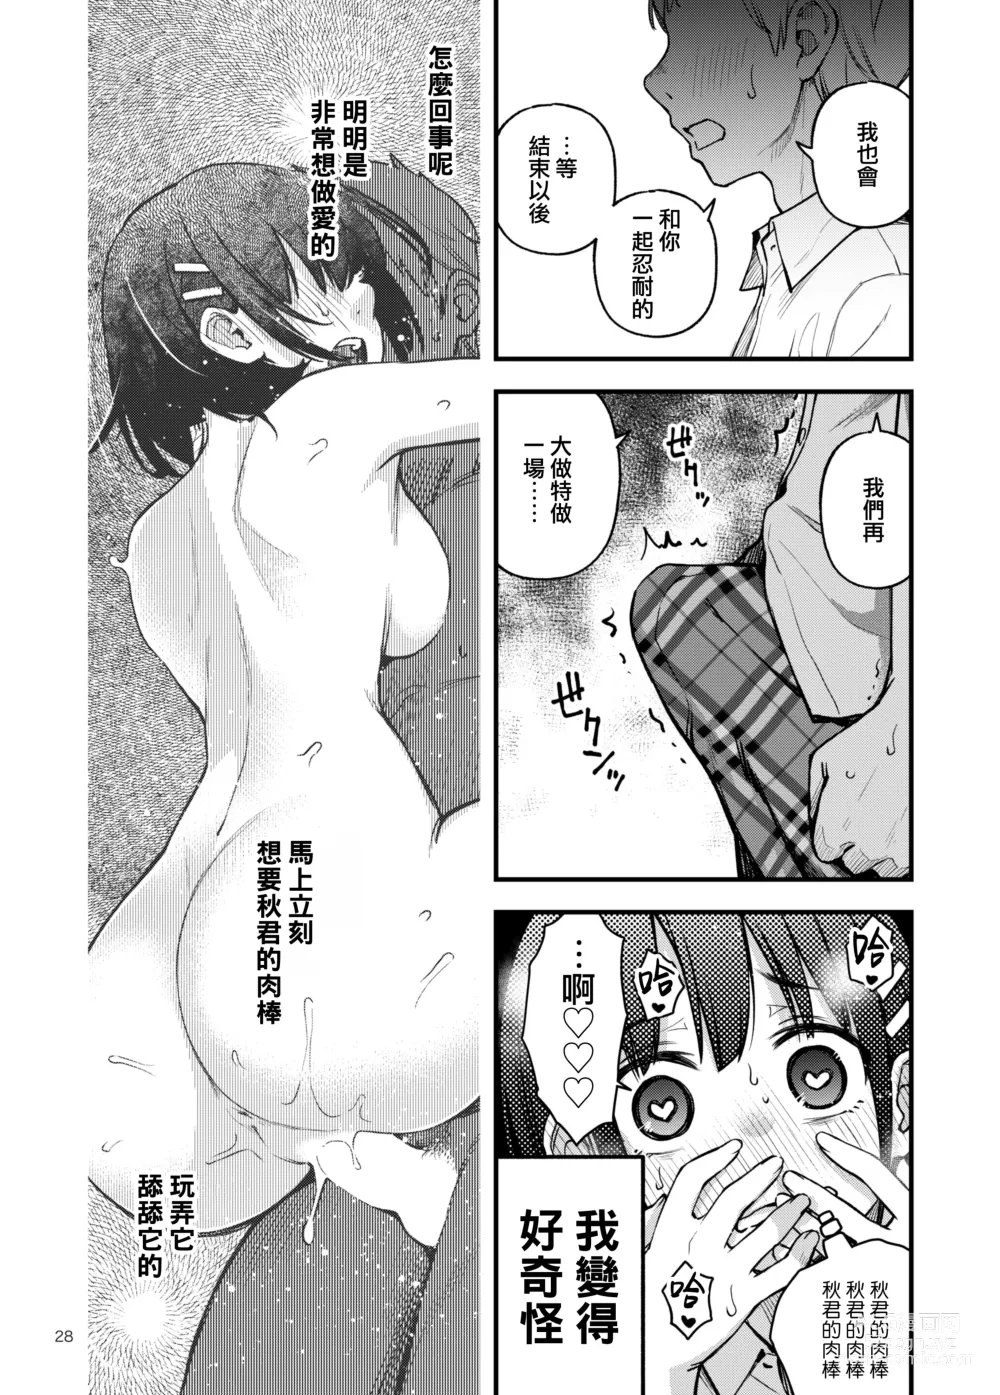 Page 28 of doujinshi 与处男初体验时觉醒的处女 2 #1-4